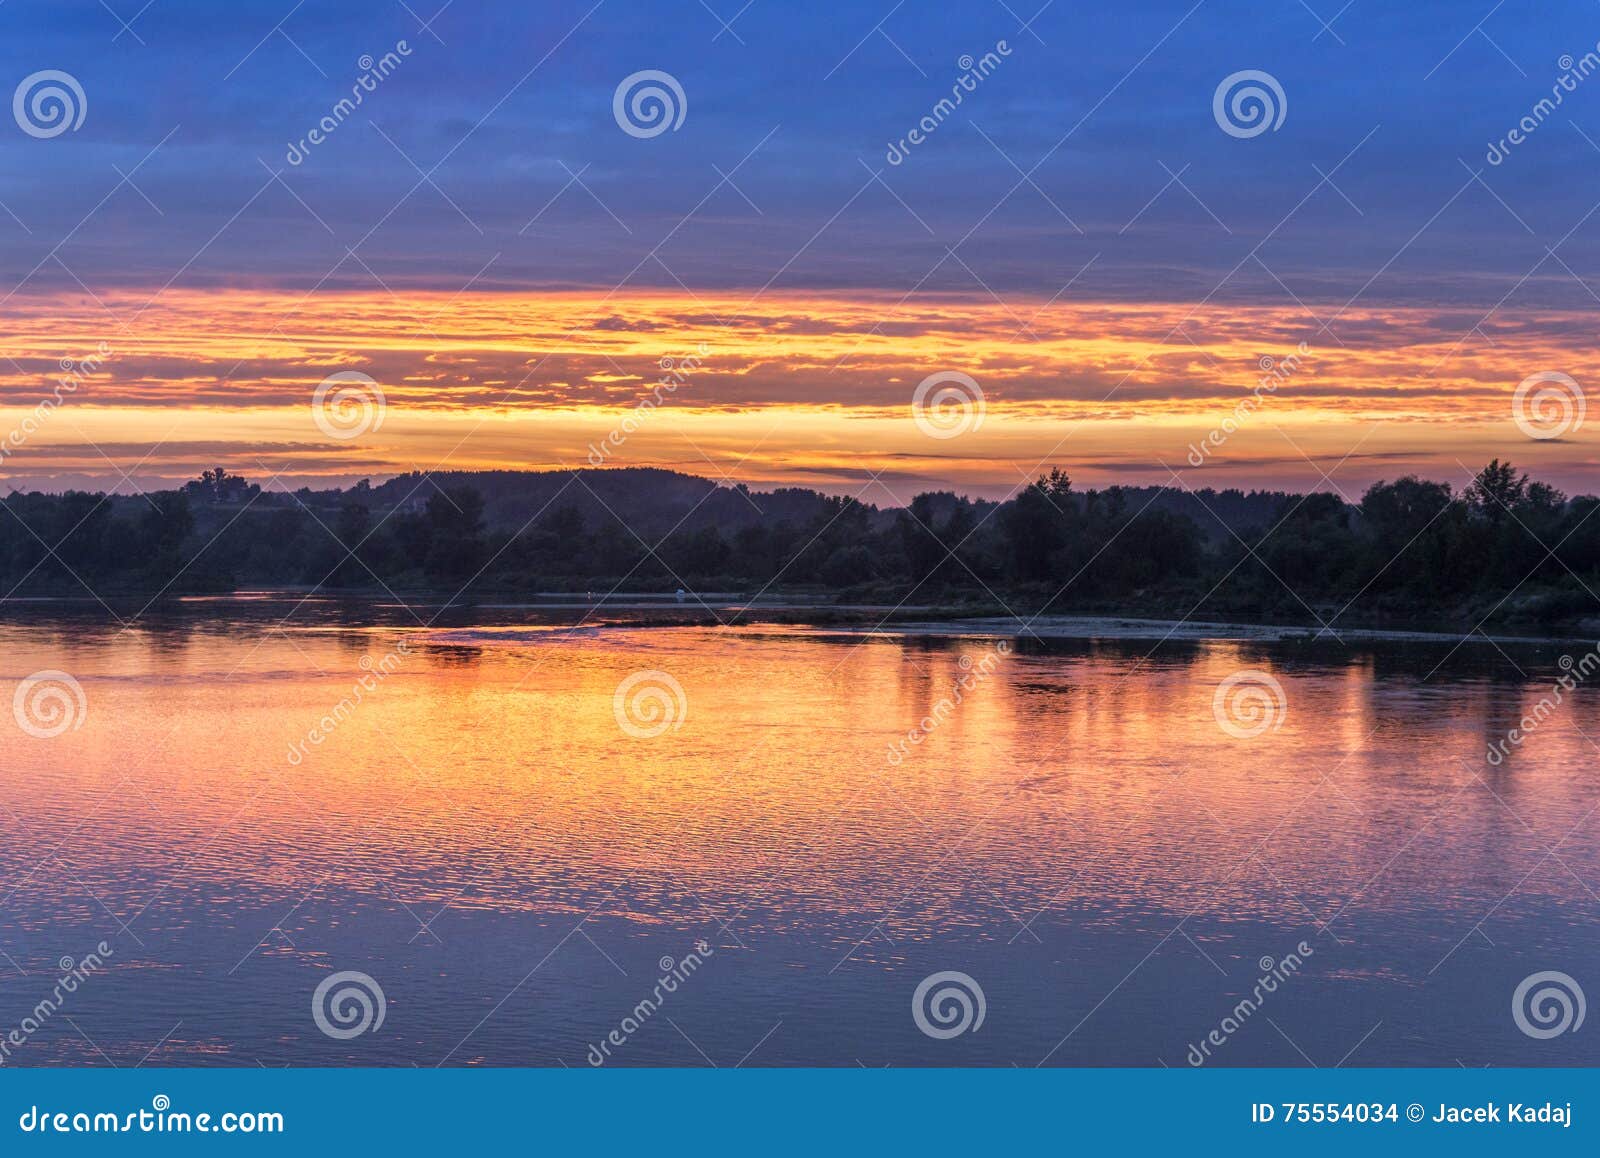 sundown over vistula river